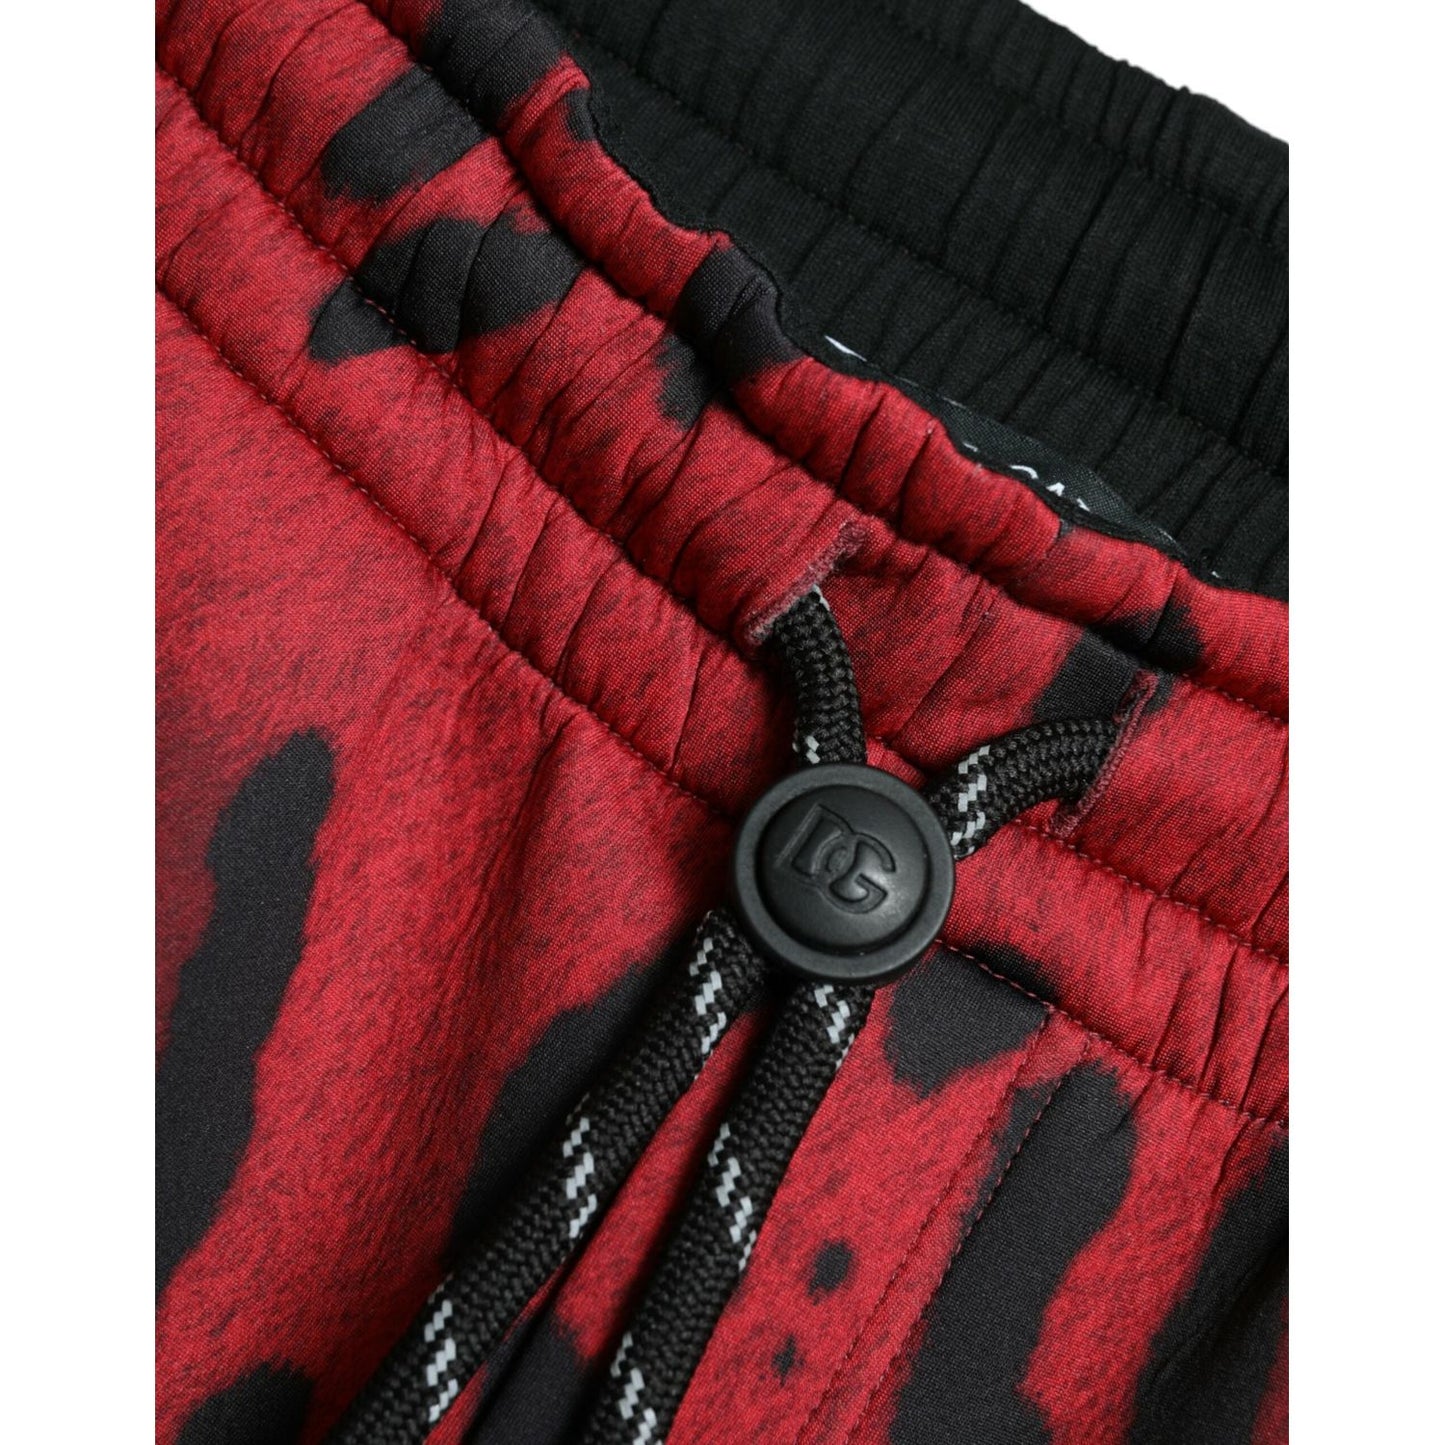 Dolce & Gabbana Elegant Leopard Print Joggers red-black-leopard-print-stretch-jogger-pants